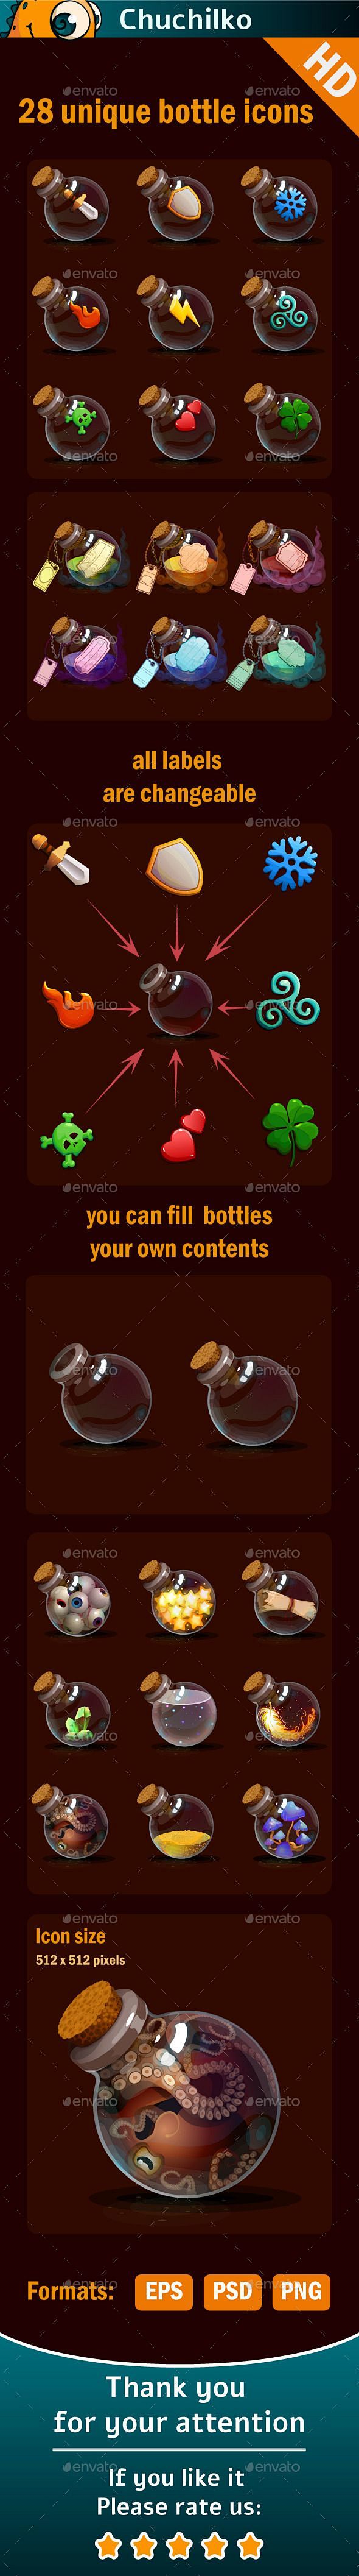 Magic bottles icons ...